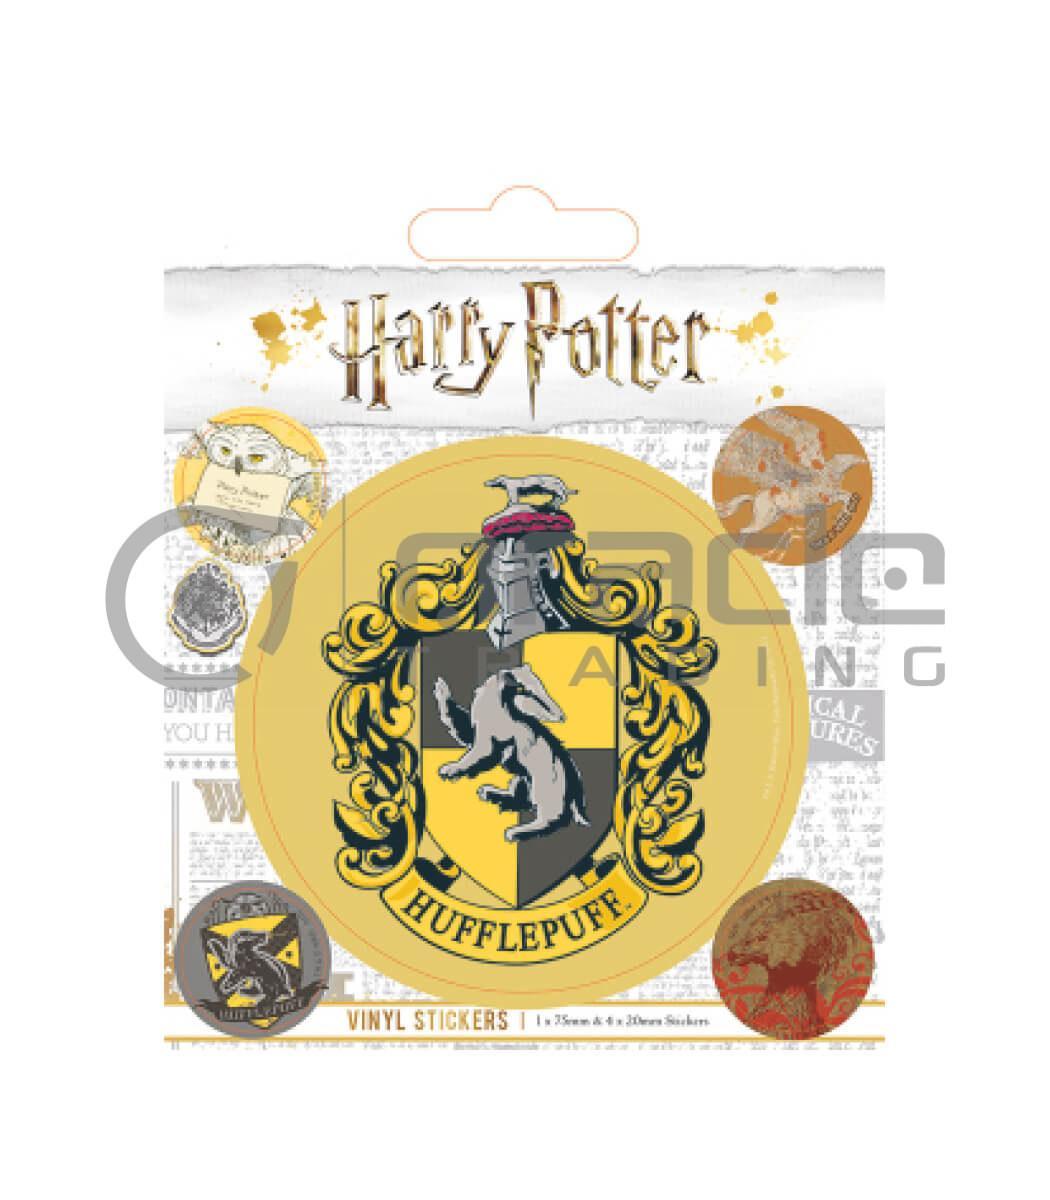 Harry Potter Hufflepuff Vinyl Sticker Pack